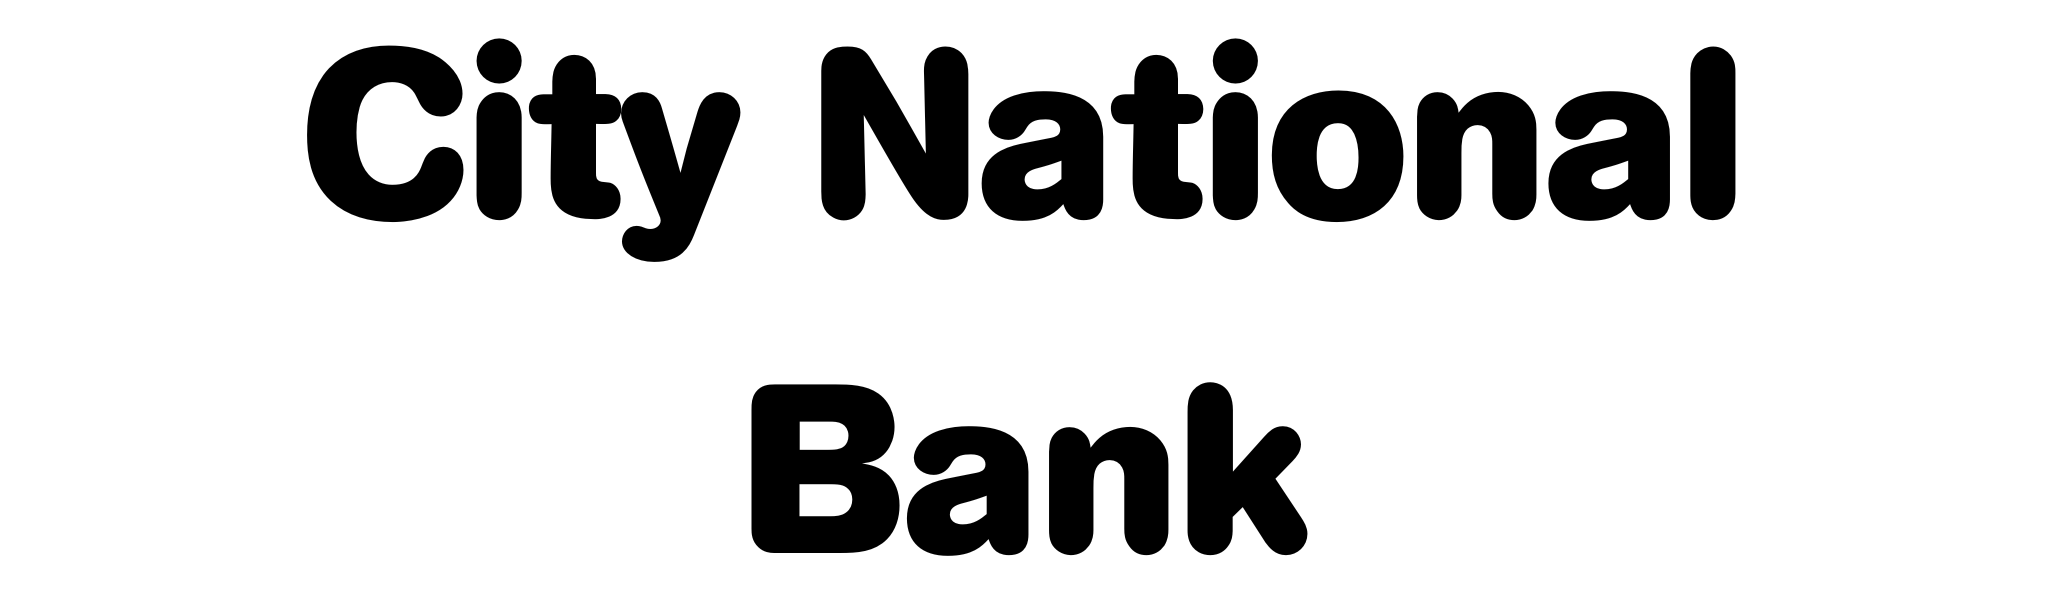 City National Bank (Bronze) 